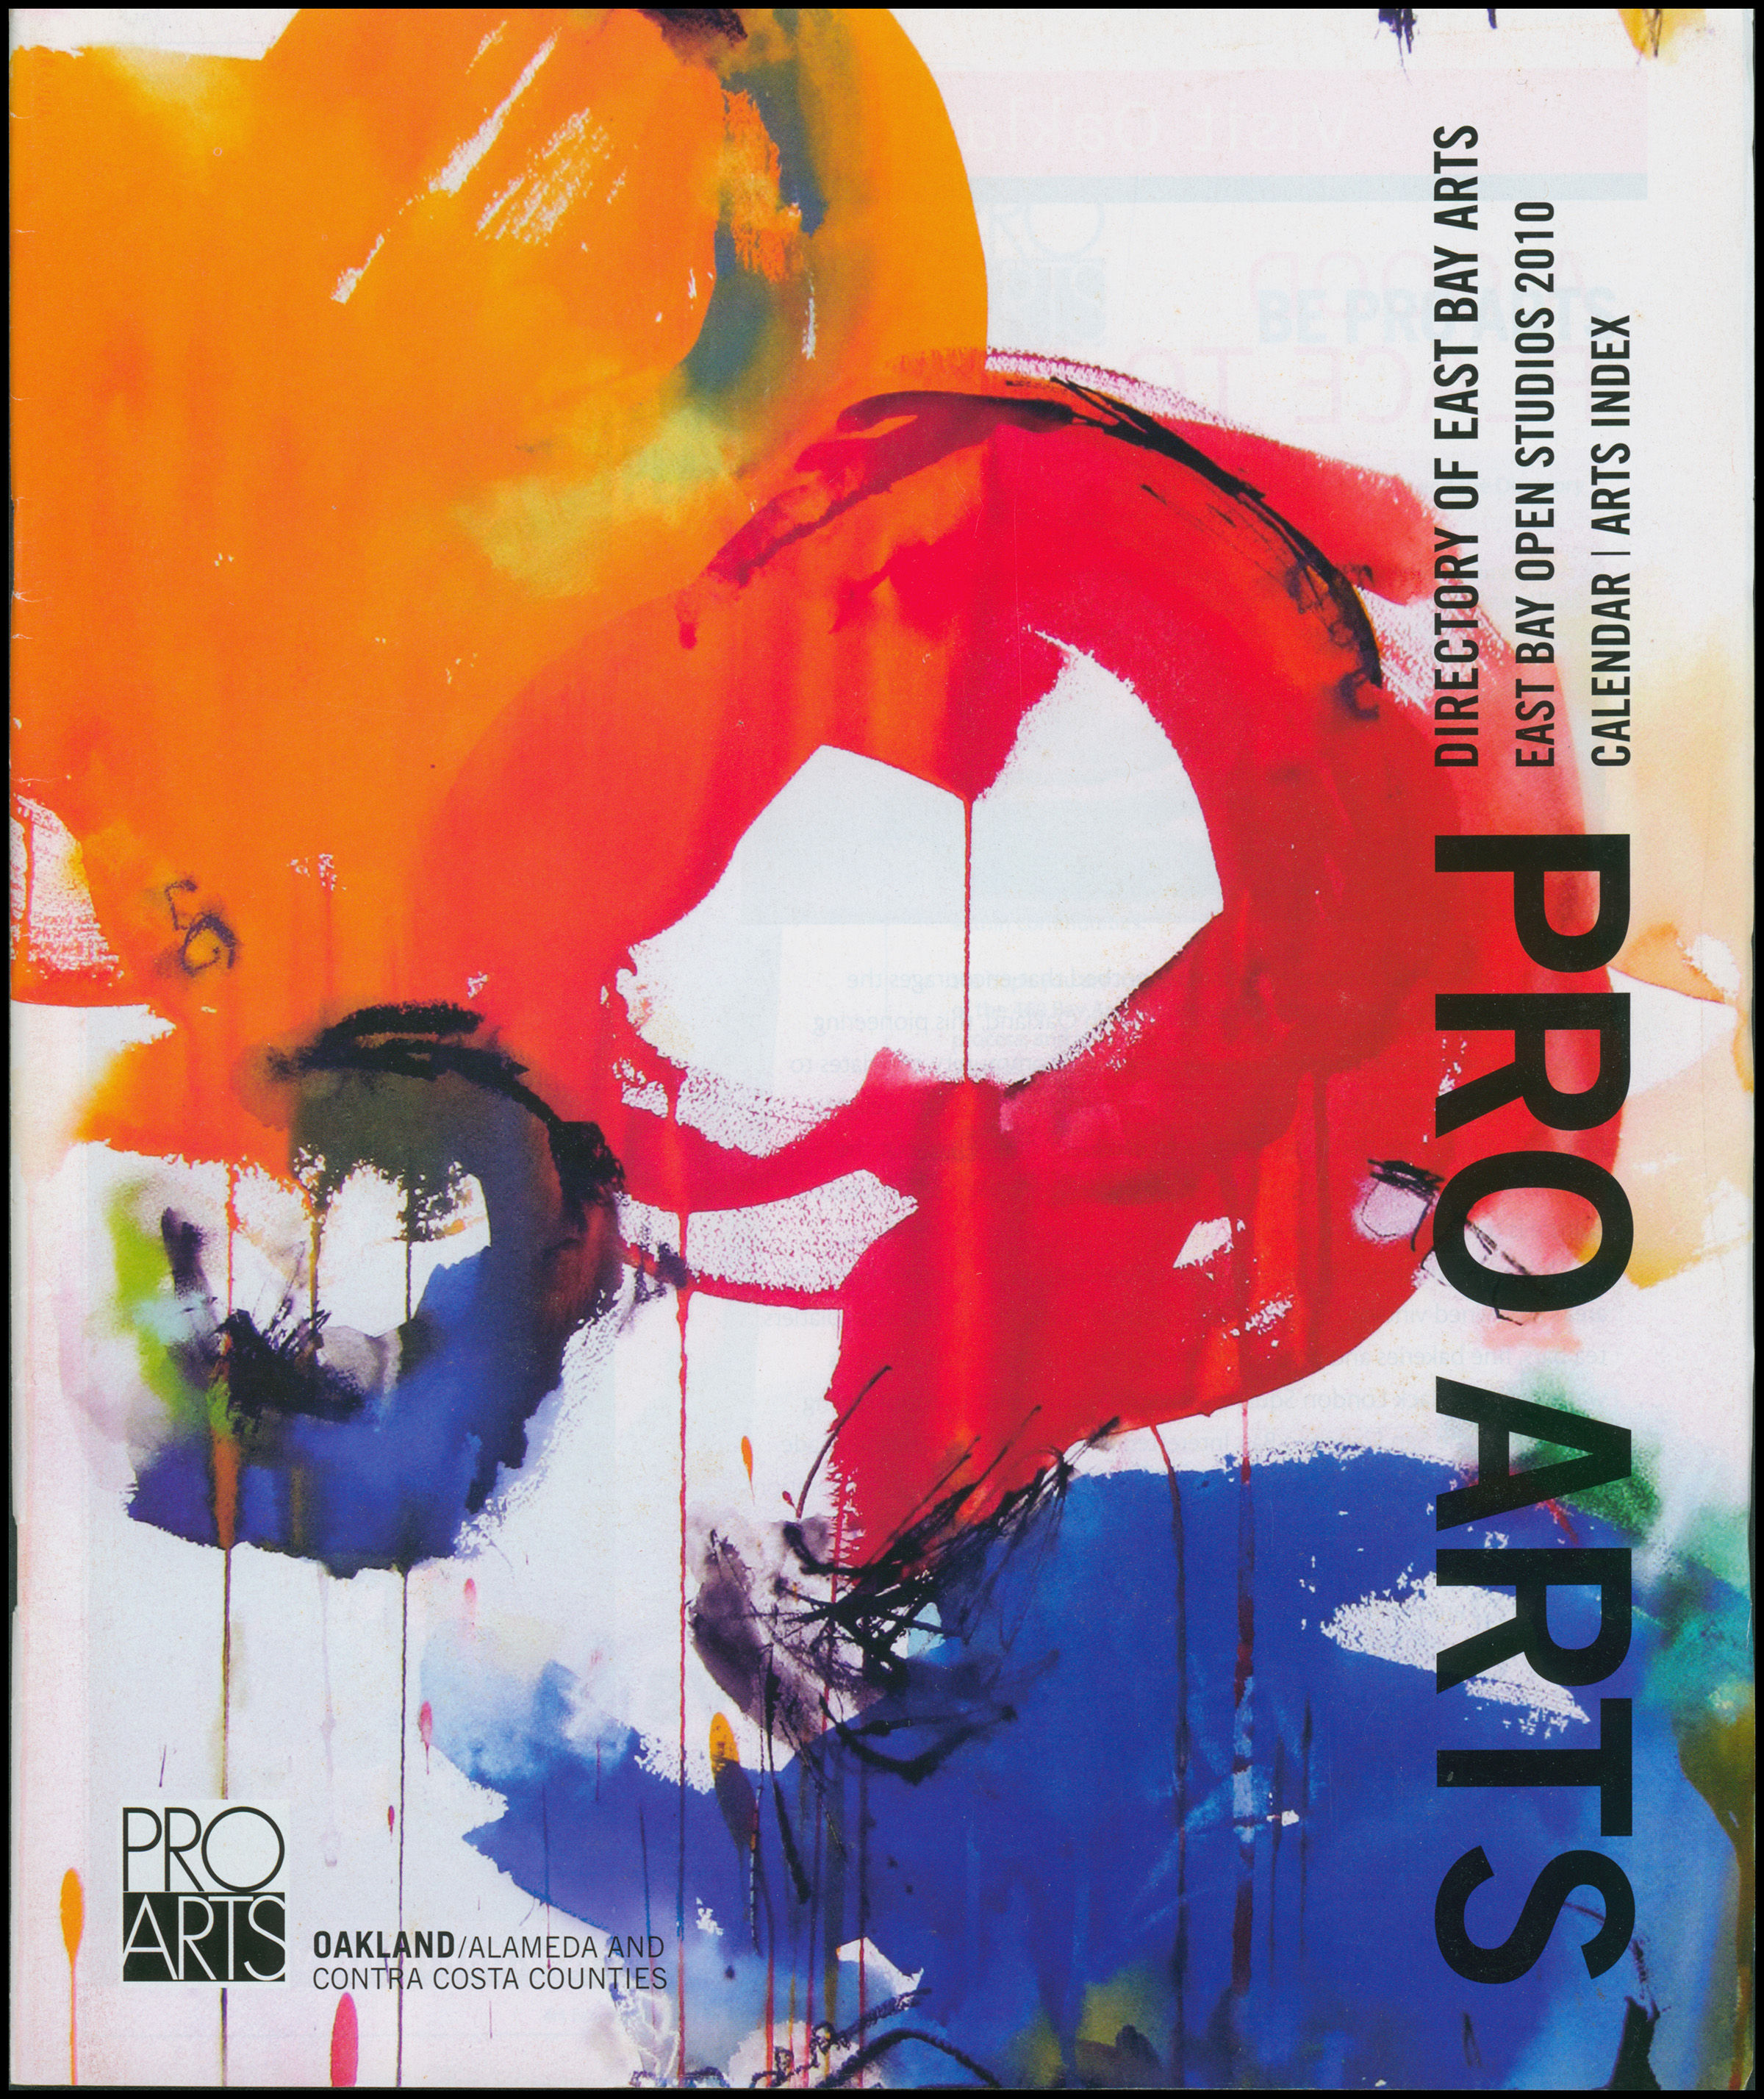 ProArts/East Bay Open Studios - Pro Arts/East Bay Open Studios Ephemera: Maps, Postcards, Invitations (1988-2014)